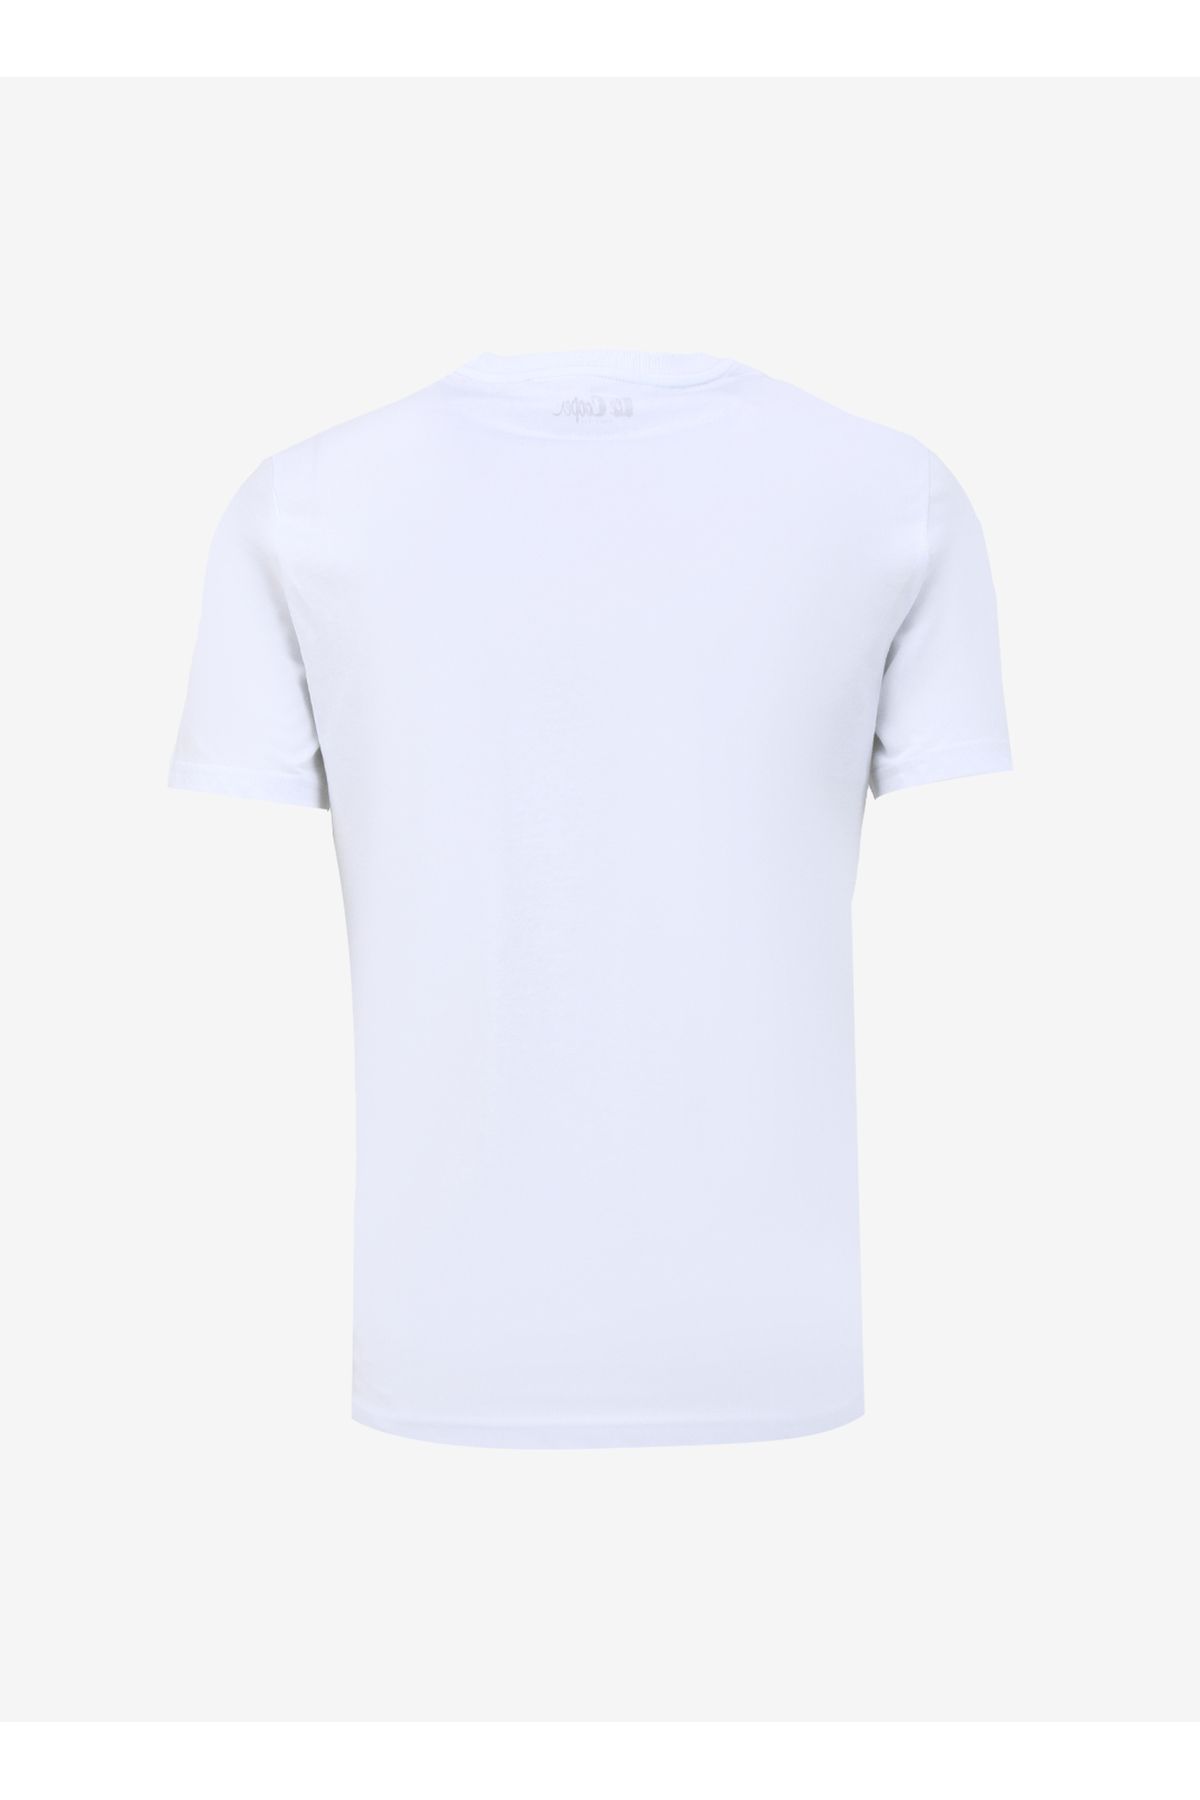 Lee Cooper تی شرت مرد سفید یقه گرد 242 LCM 242014 WILLY WHITE